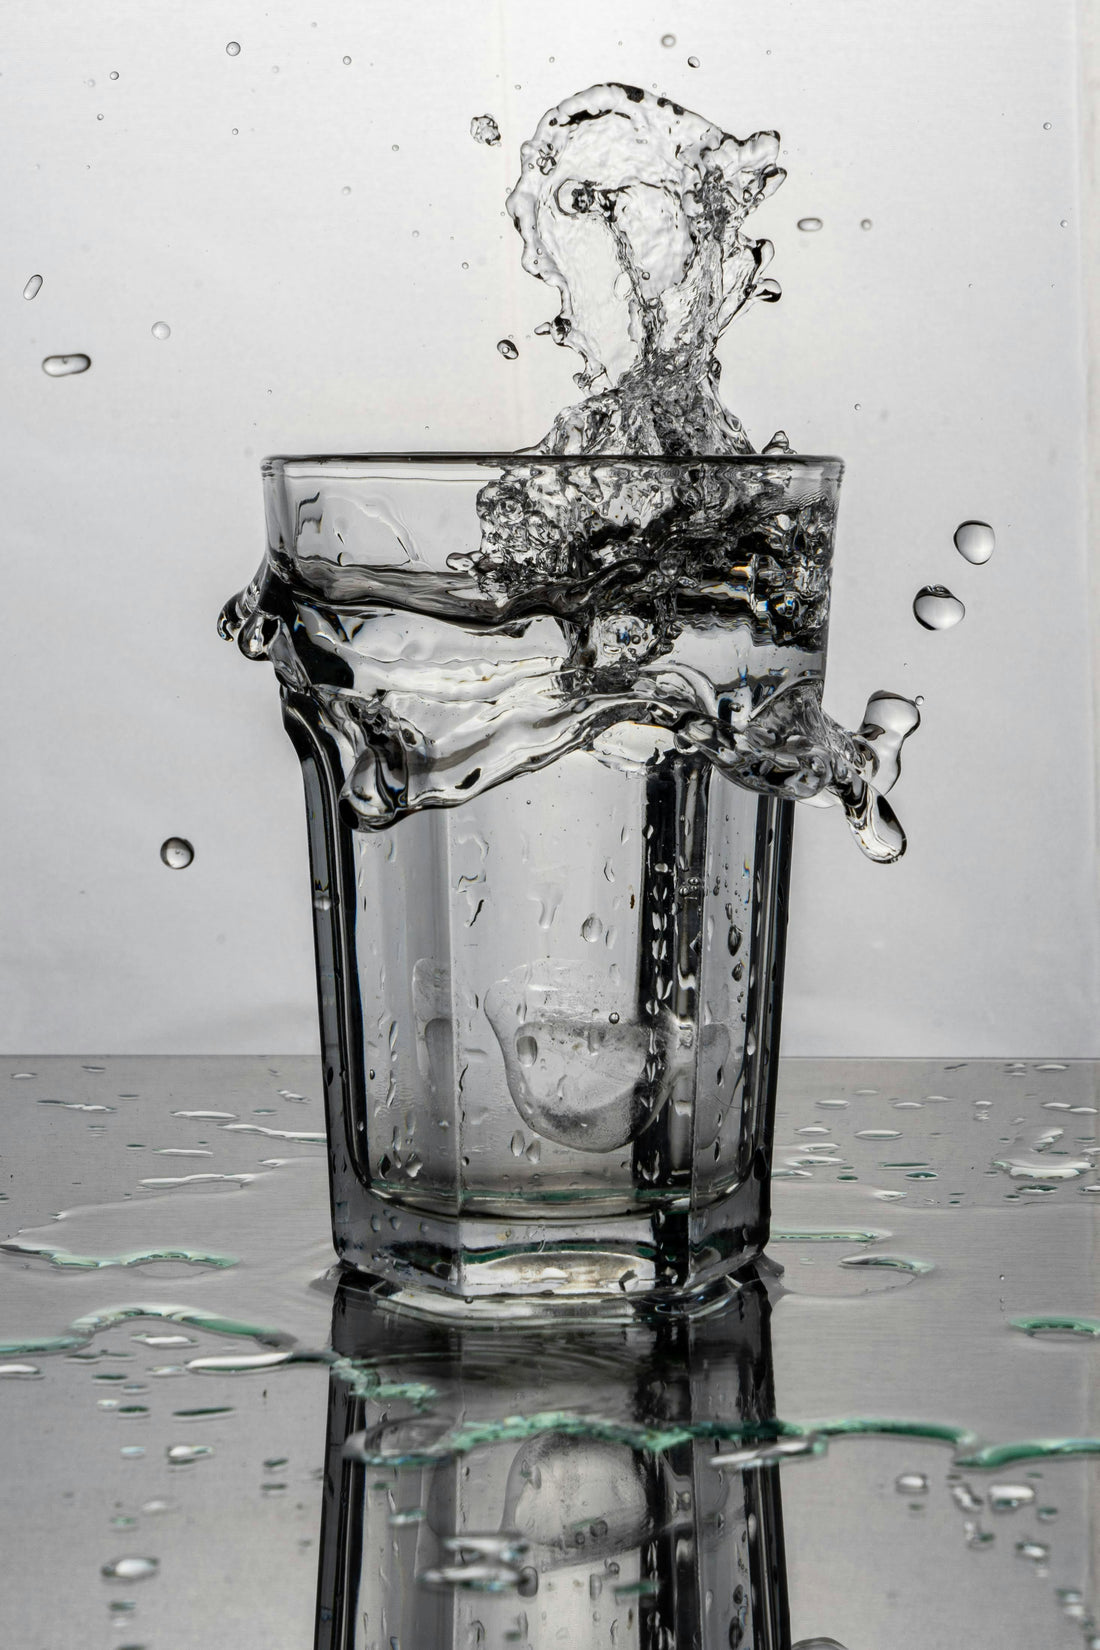 Glass of splashing water. Photo by Nicolas Ruiz on Unsplash